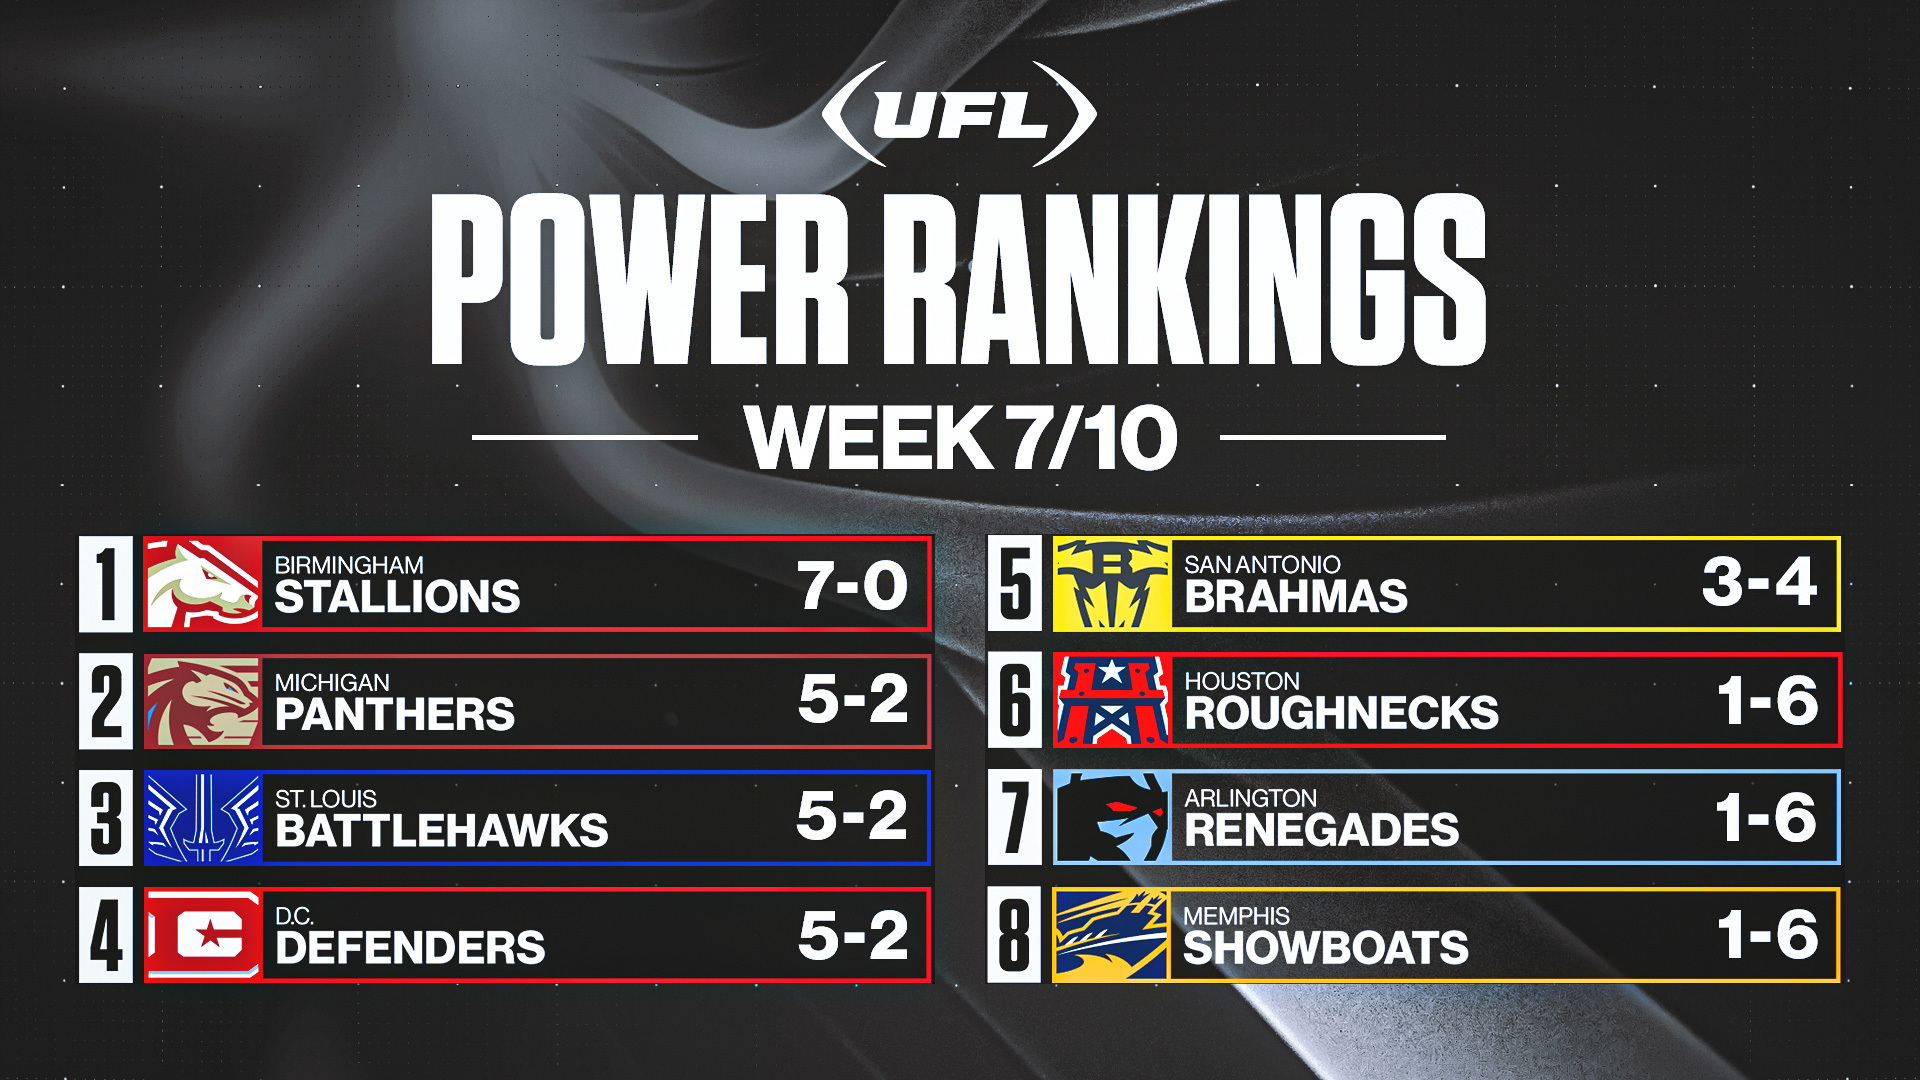 UFL Week 7 power rankings: Panthers climbing, Showboats losing steam